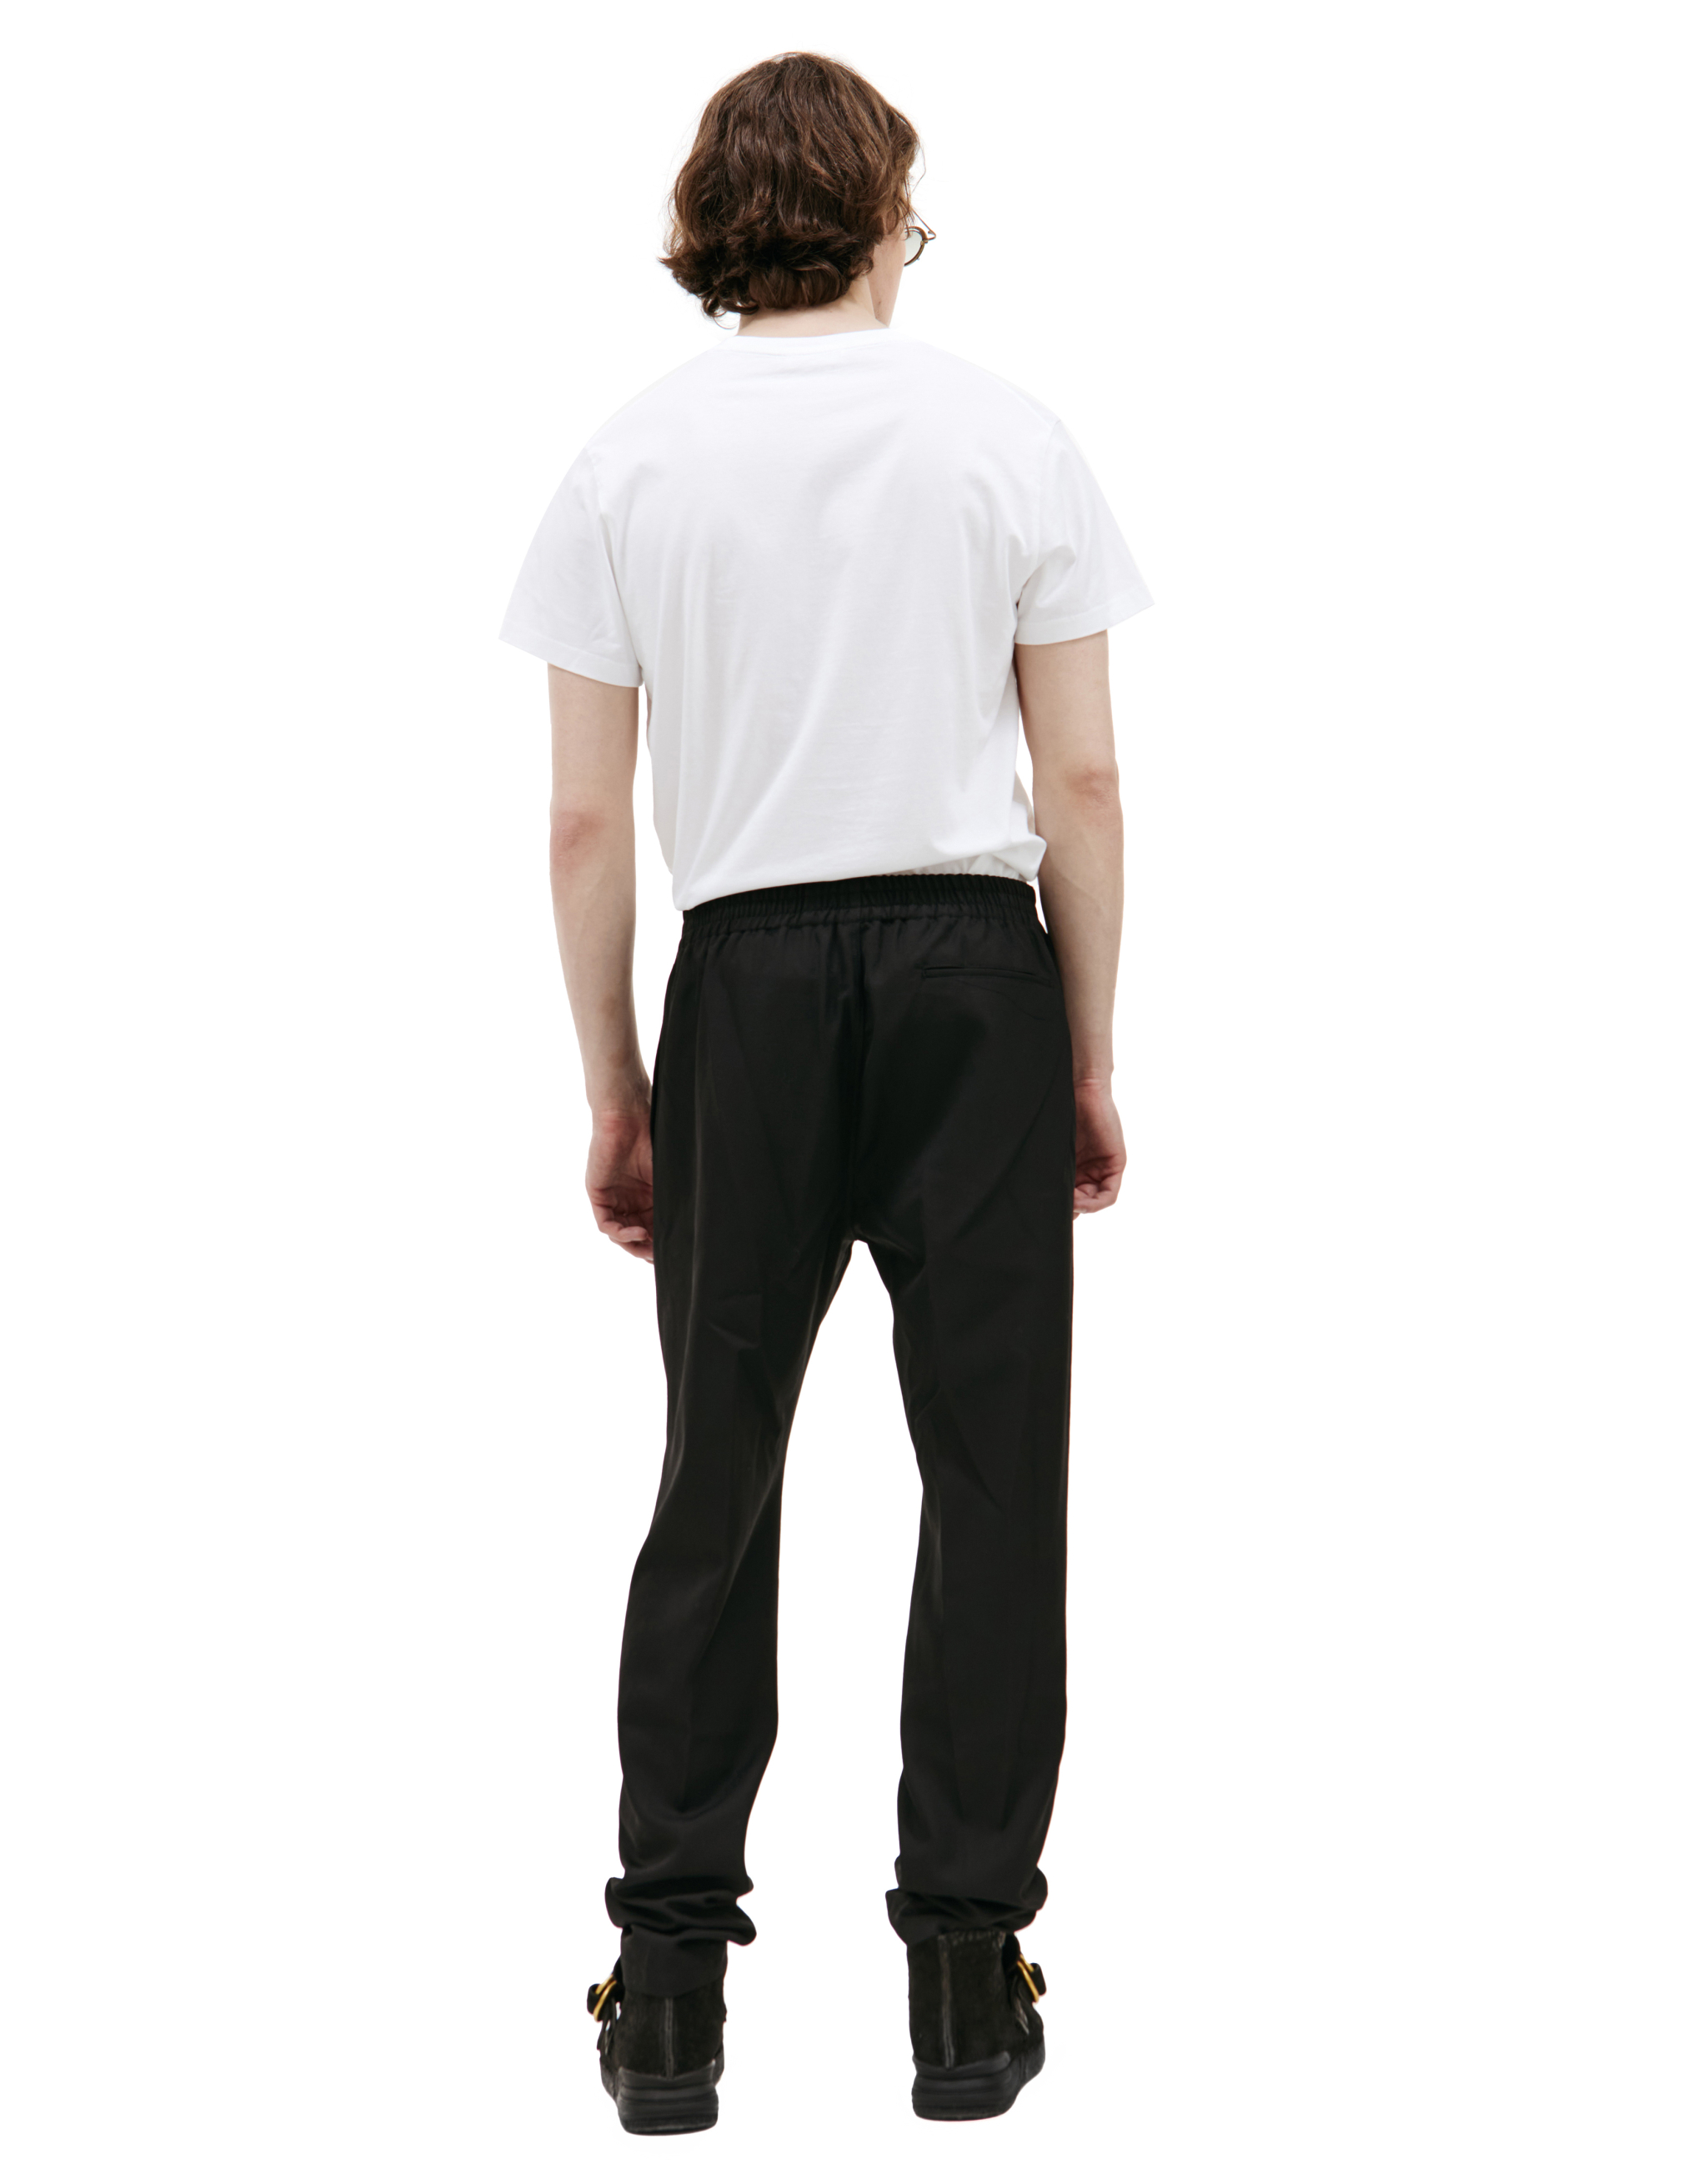 Прямые брюки со стрелками LOUIS GABRIEL NOUCHI 0711/T115/001, размер M;L;XL 0711/T115/001 - фото 3